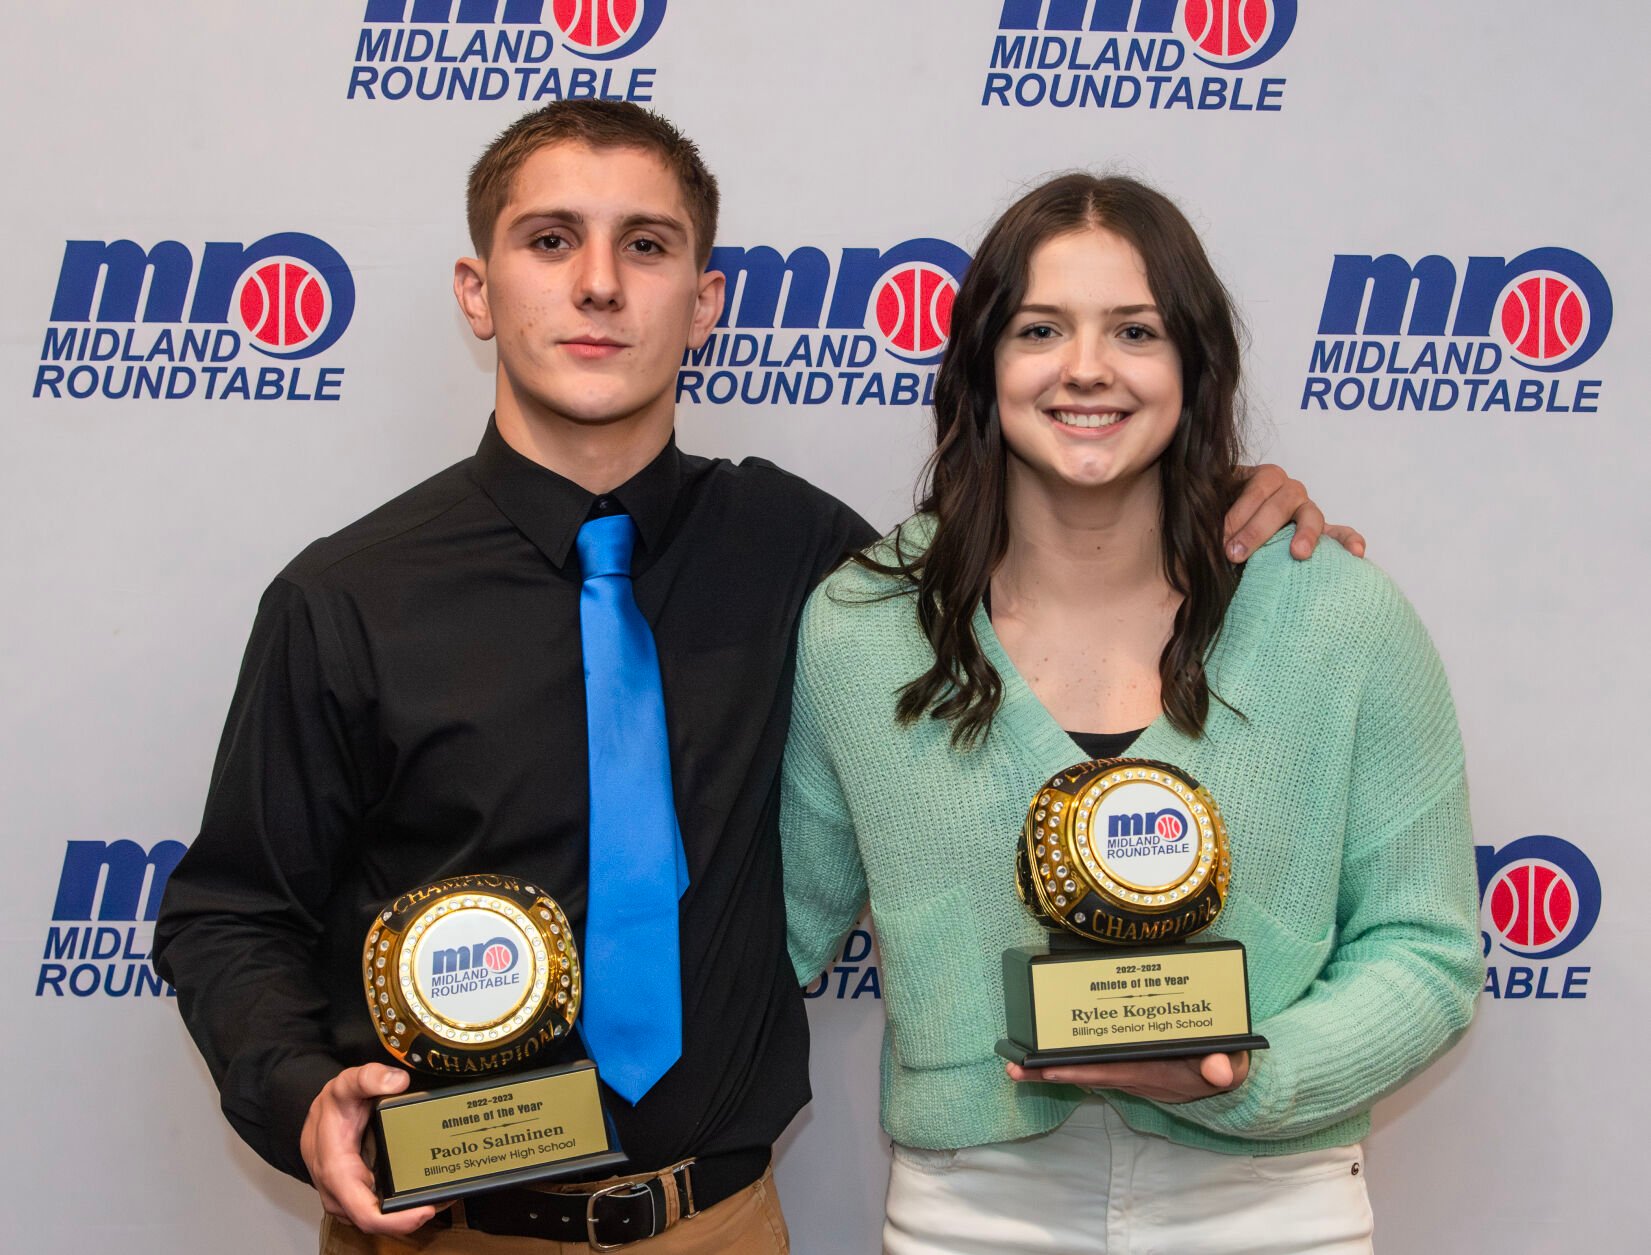 Paolo Salminen and Rylee Kogolshak win Midland Roundtable Athlete of the Year awards photo